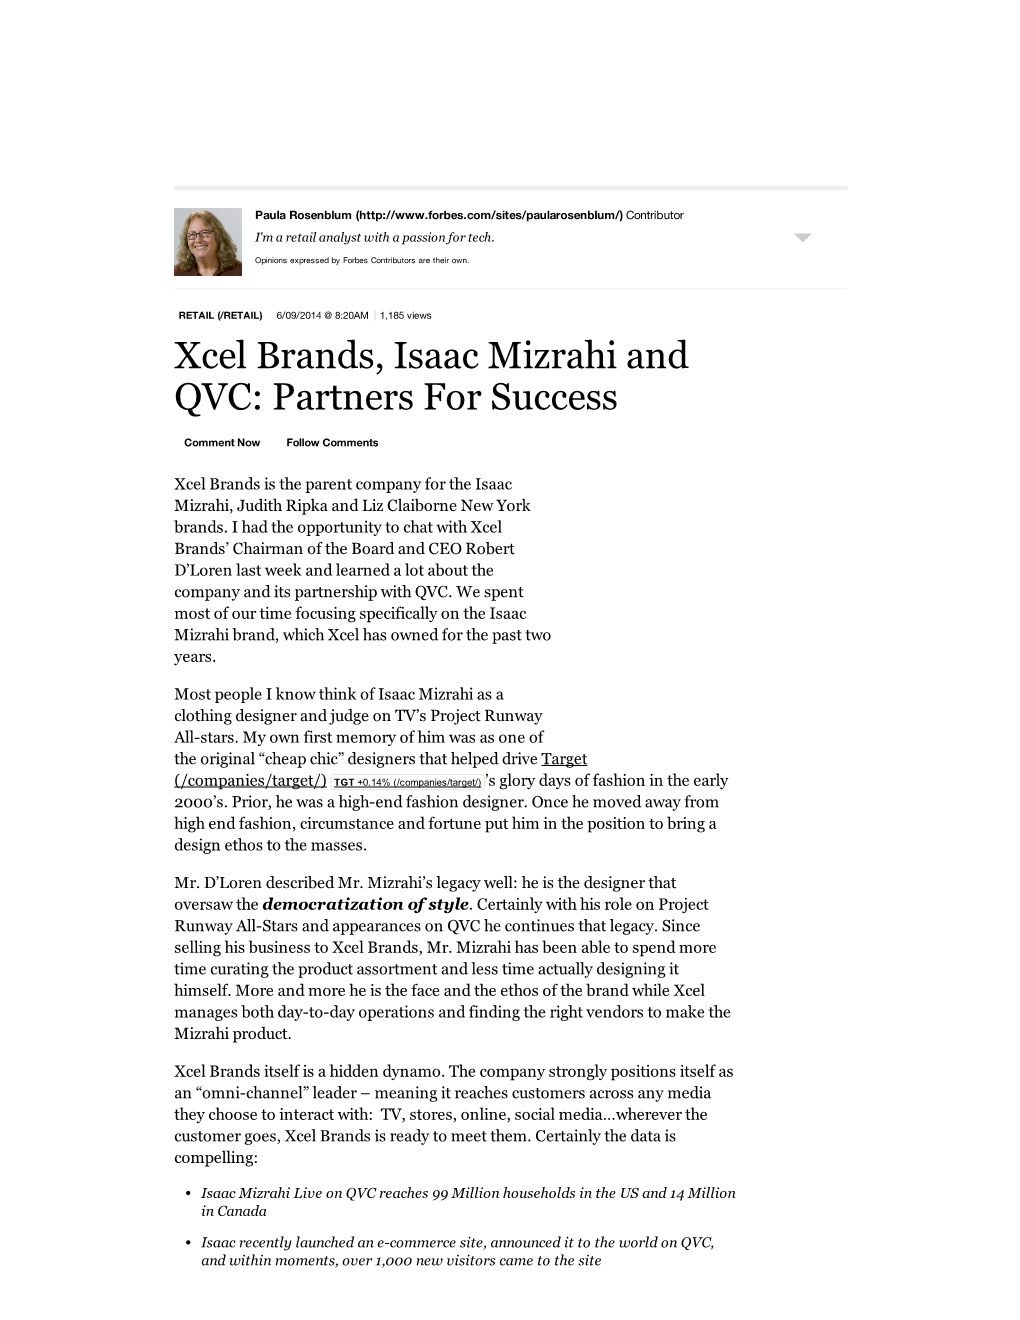 Xcel Brands, Isaac Mizrahi, and QVC: Partners for Success/ Forbes/ Jun 9